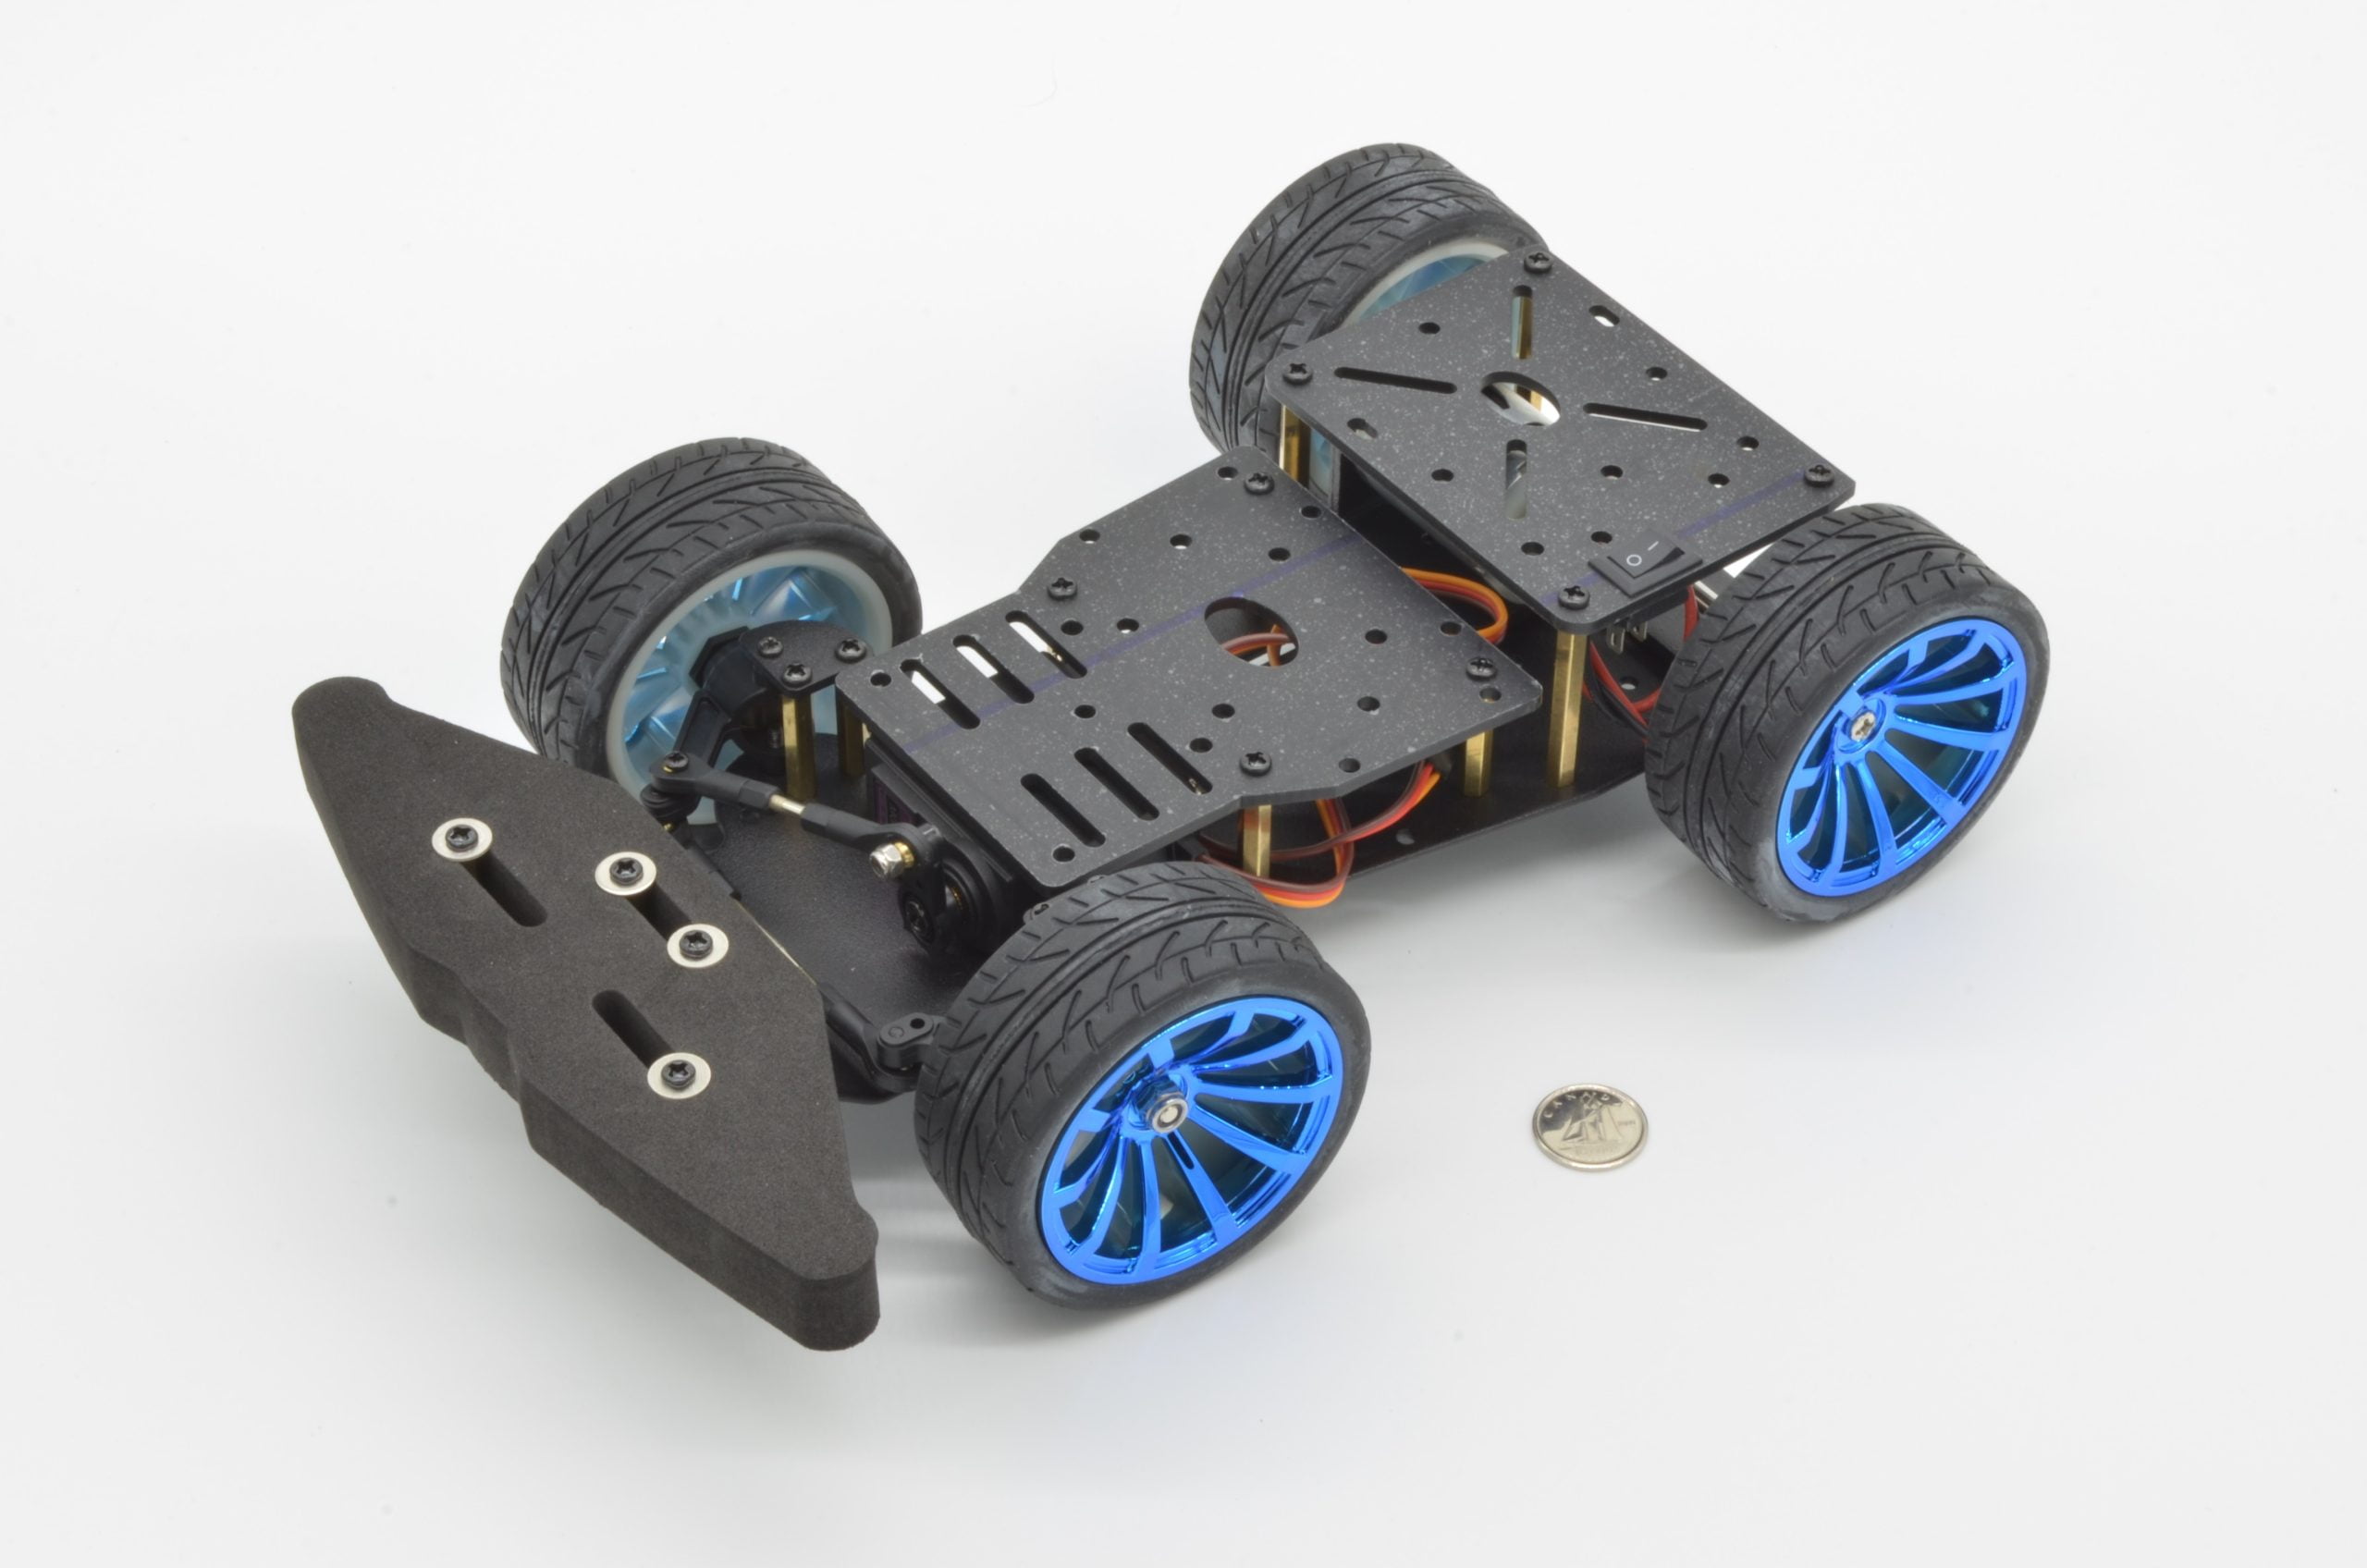 65mm Metal Wheel 2WD Drive Metal Smart Robot Car Chassis Arduino DIY Kit 